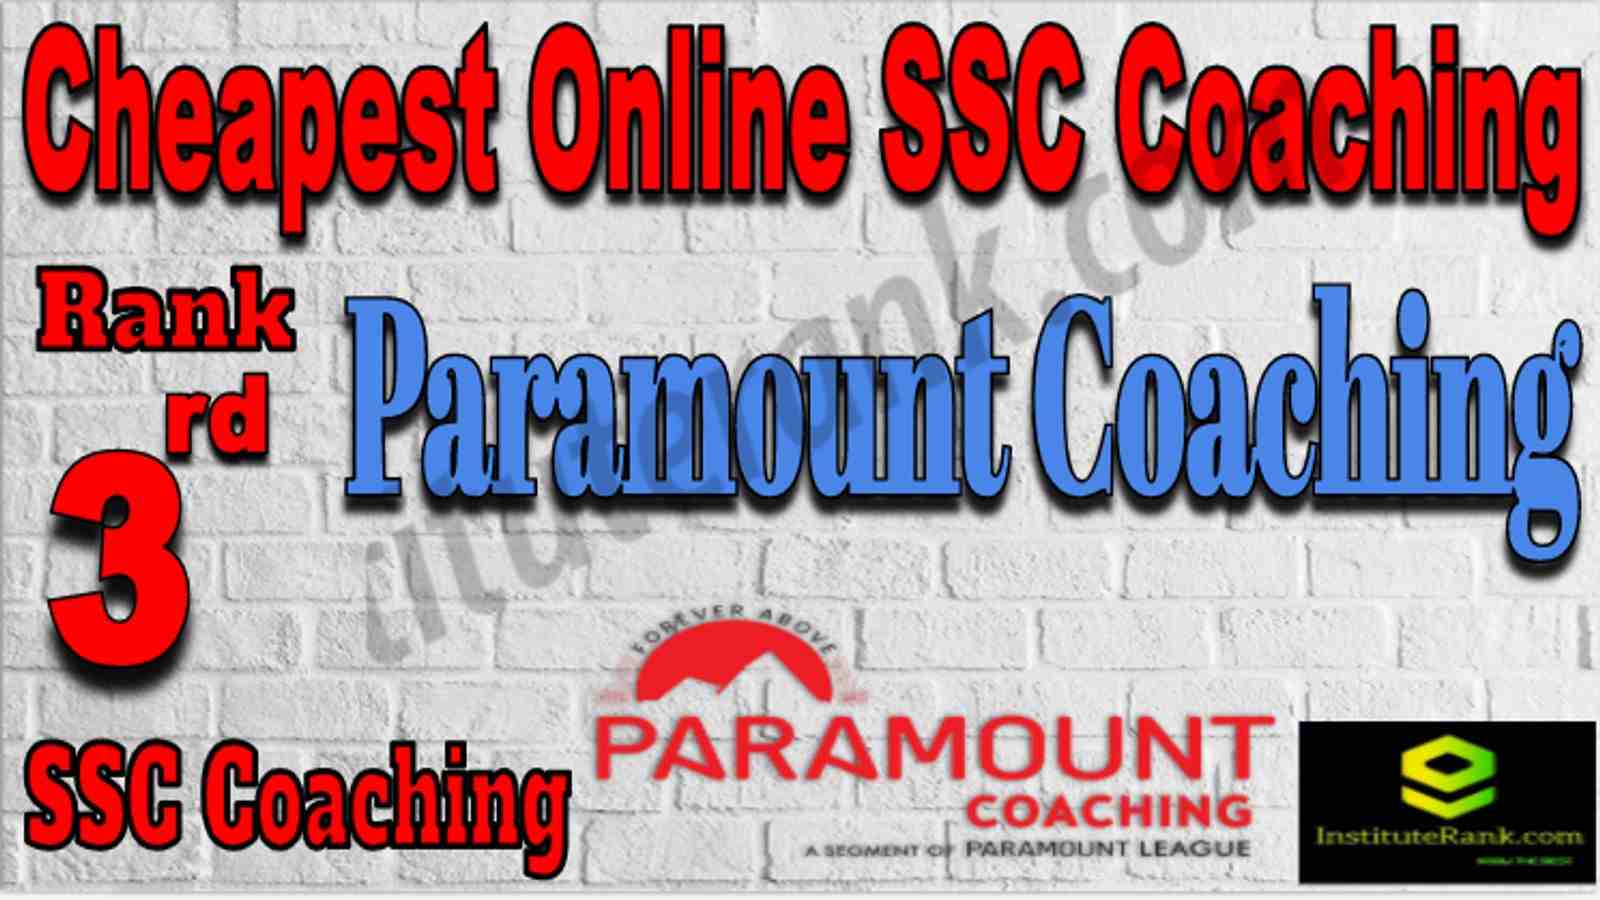 Rank 3 Cheapest Online SSC Coaching